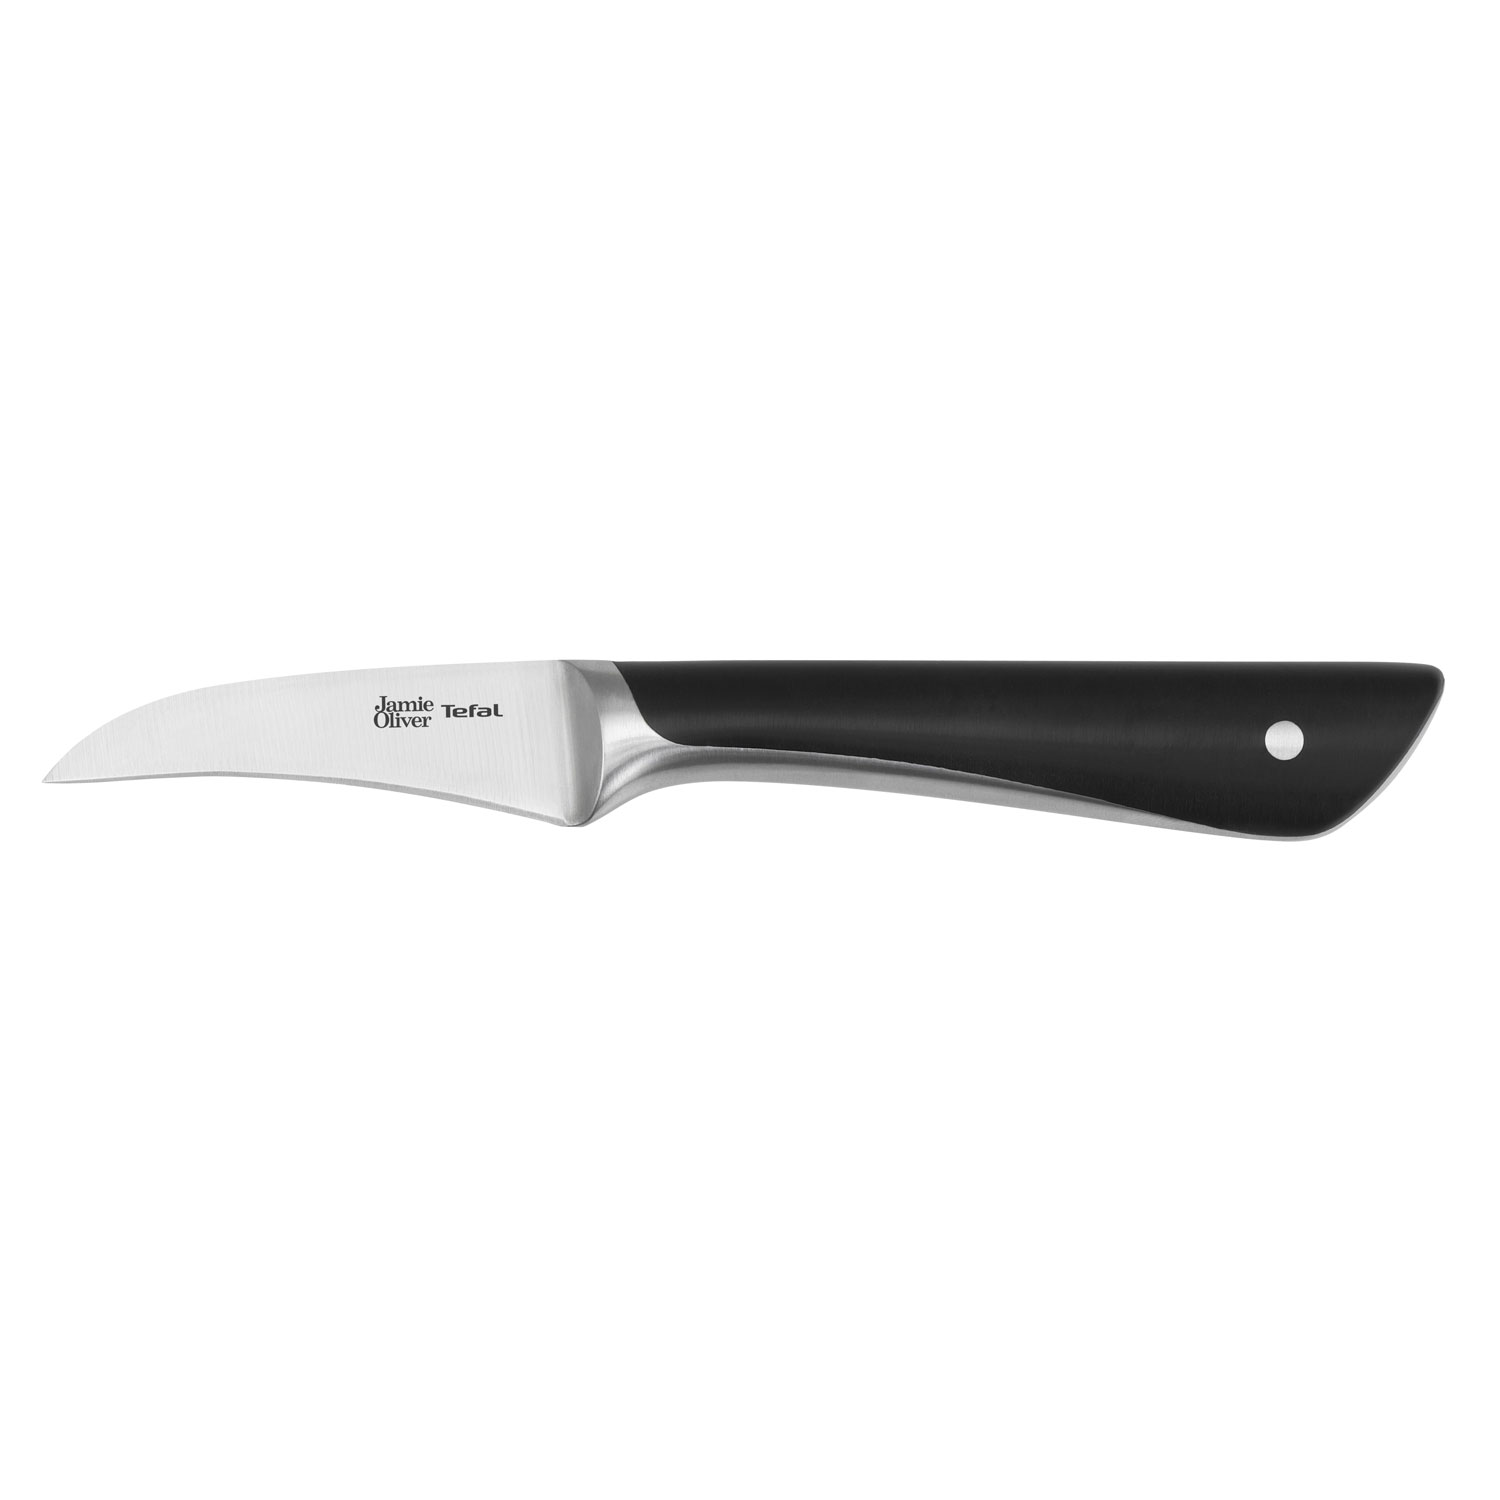 Tefal Jamie Oliver Knife 7 cm - Peeling Knives Stainless Steel Black - K2671655